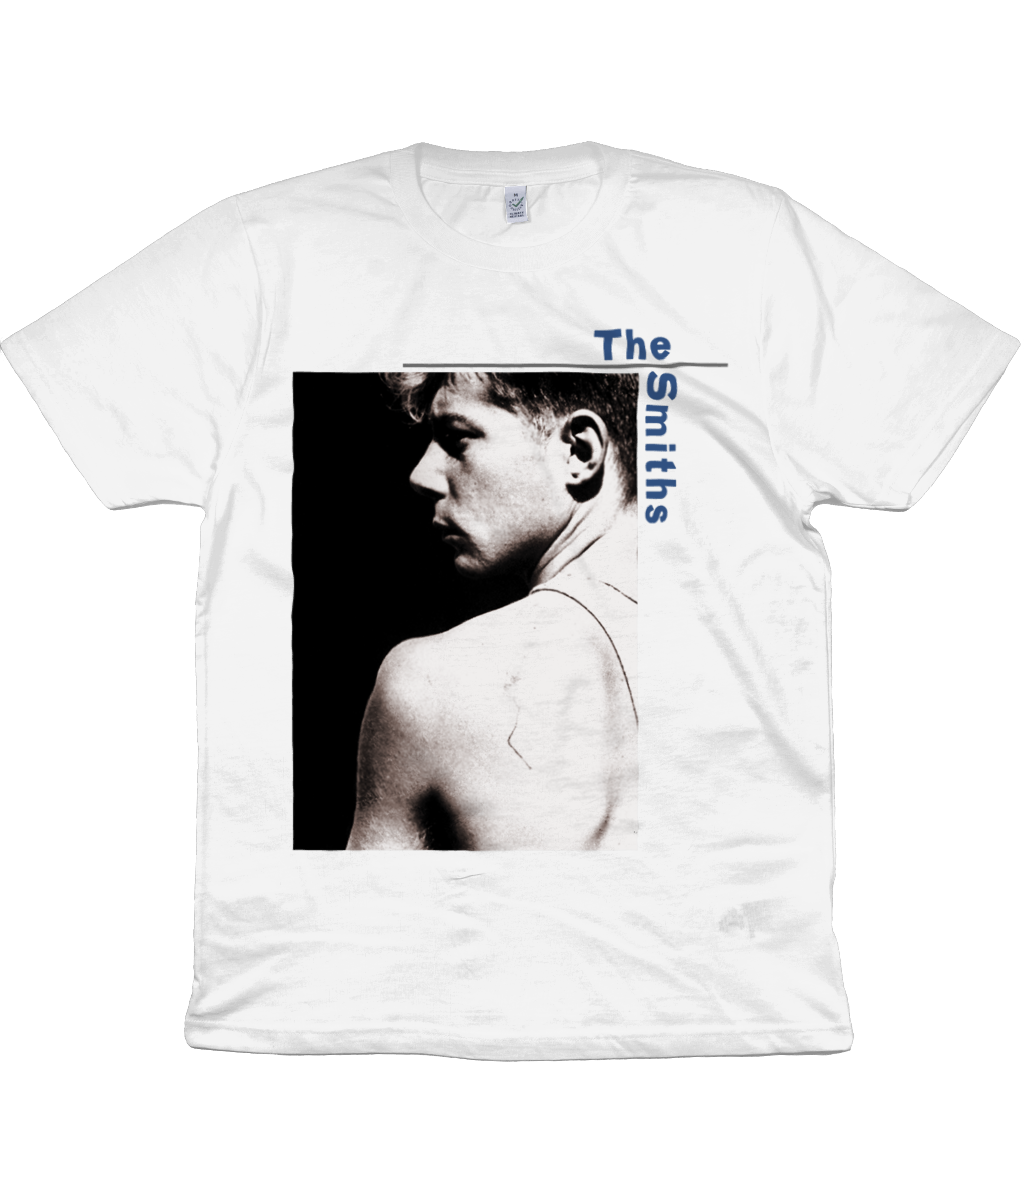 The Smiths - Hatful Of Hollow - 1984 - Promo - White